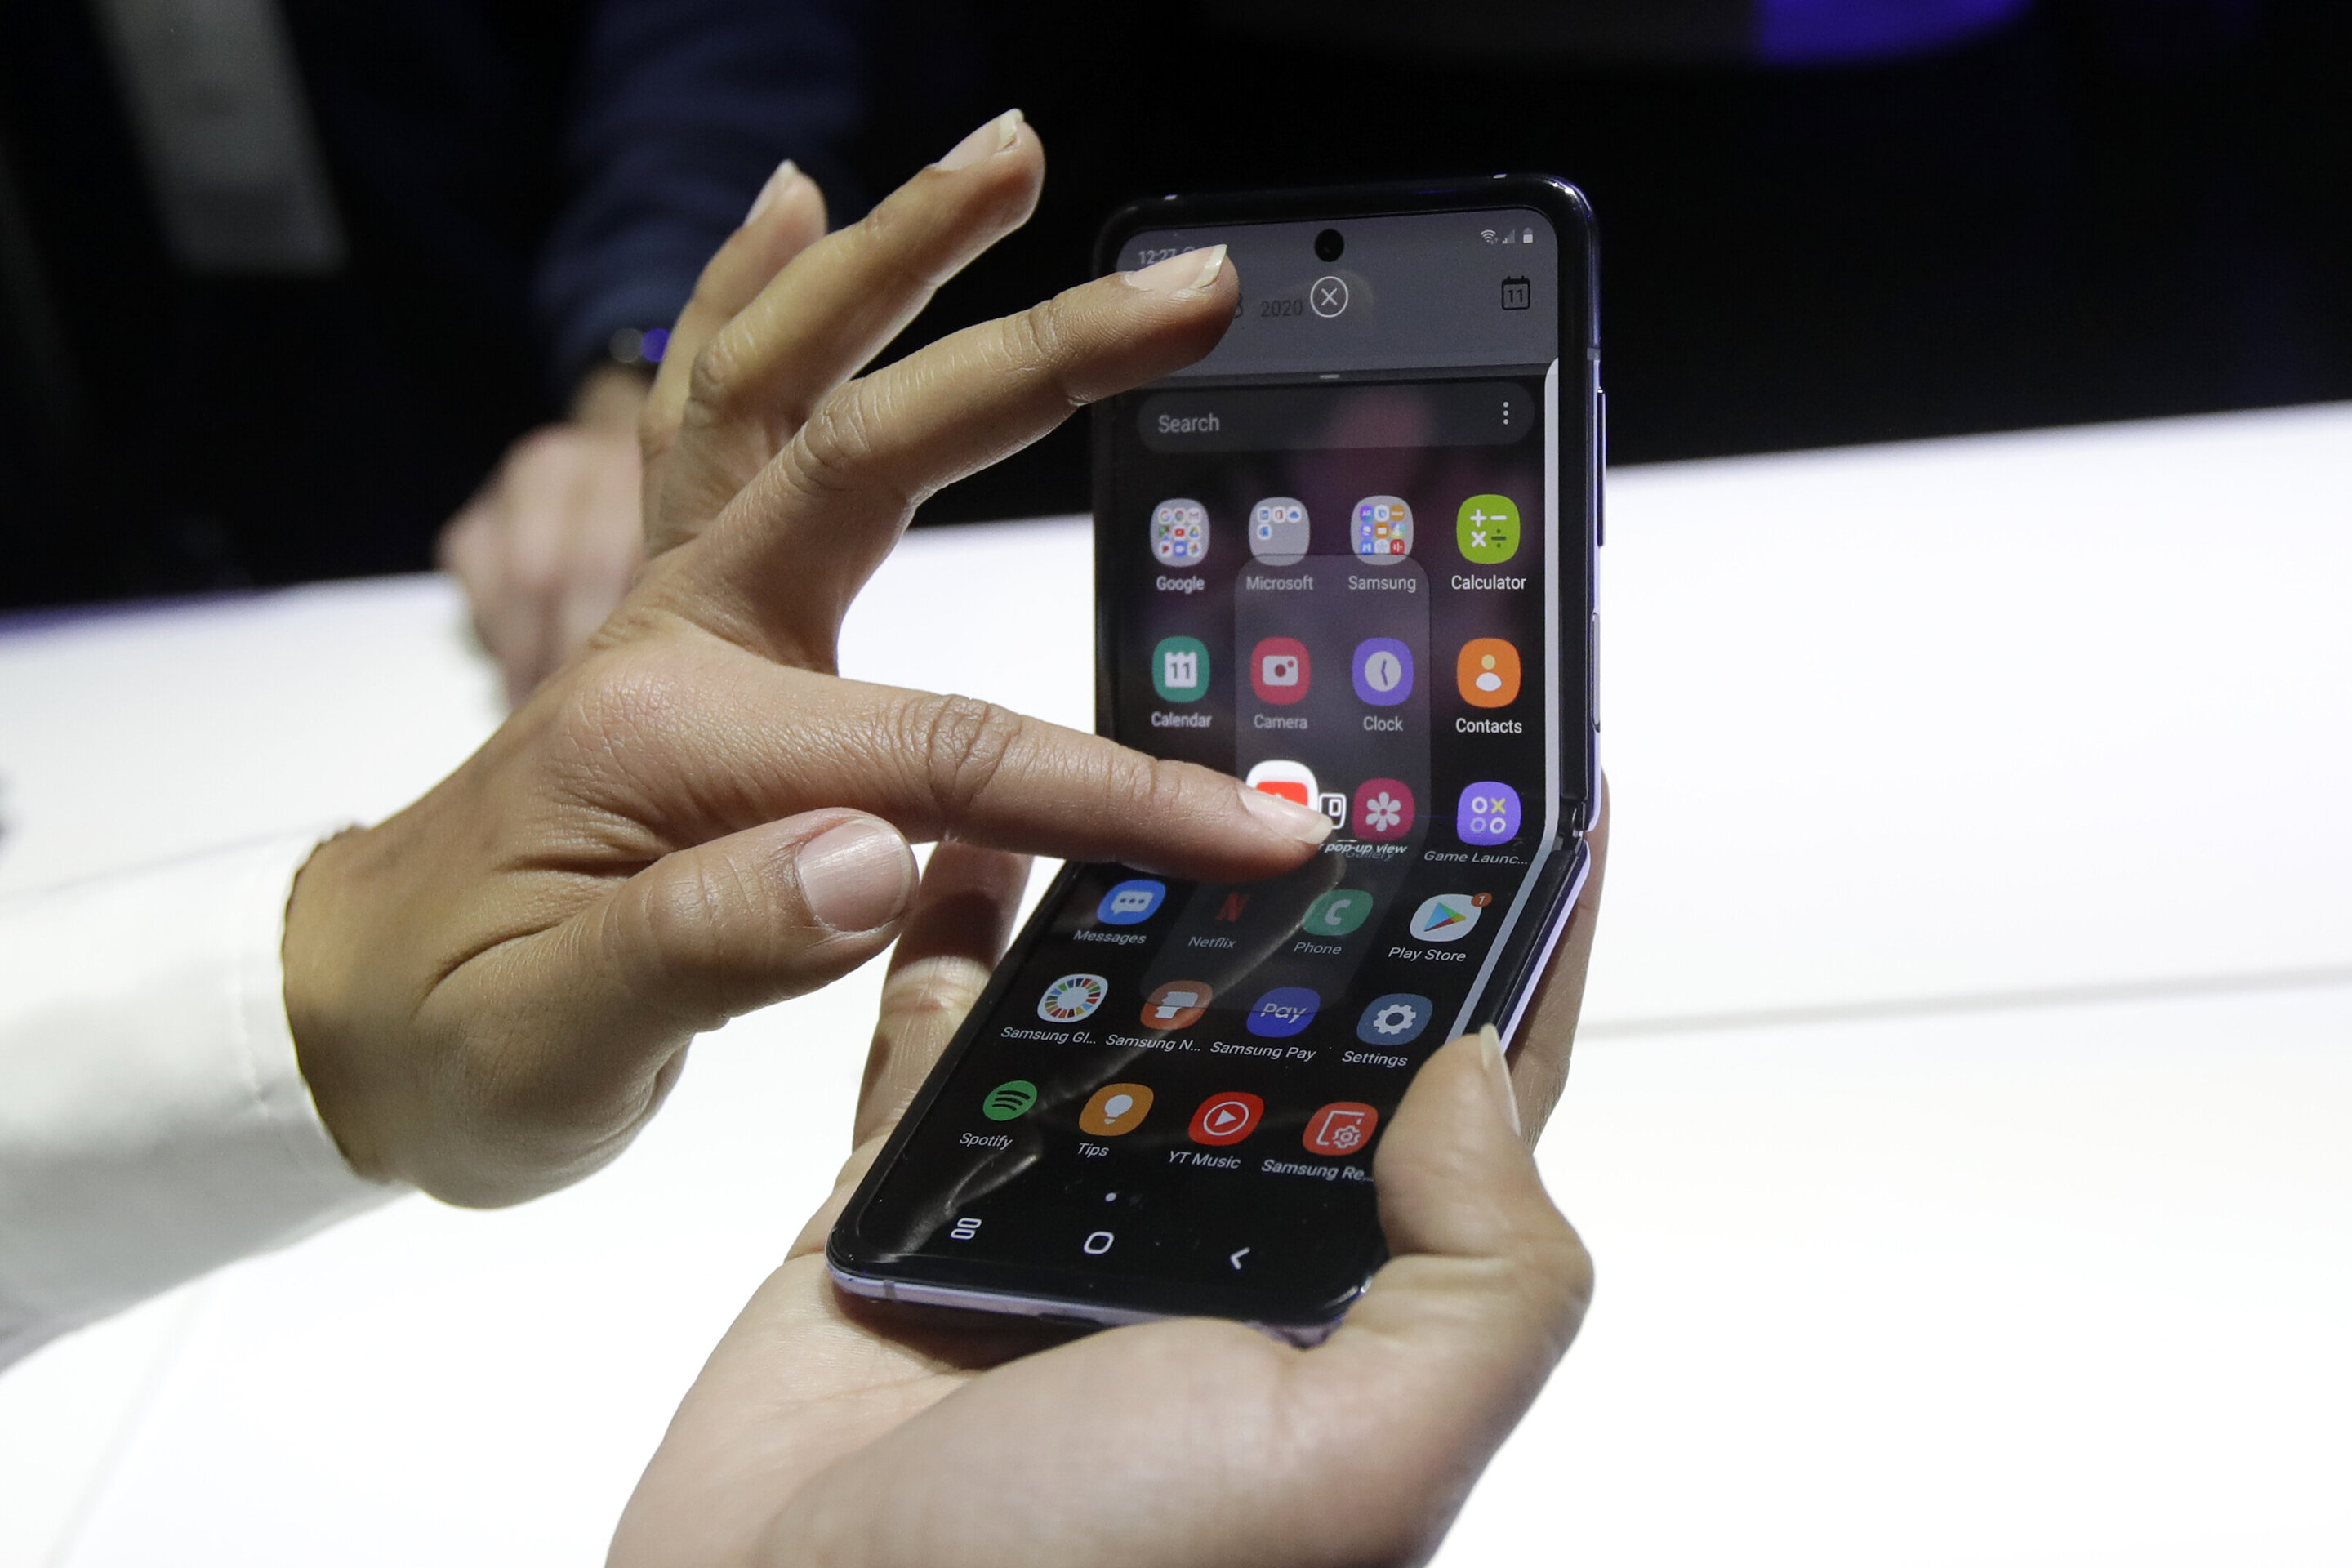 Samsung New Model 2020 Folding Phone